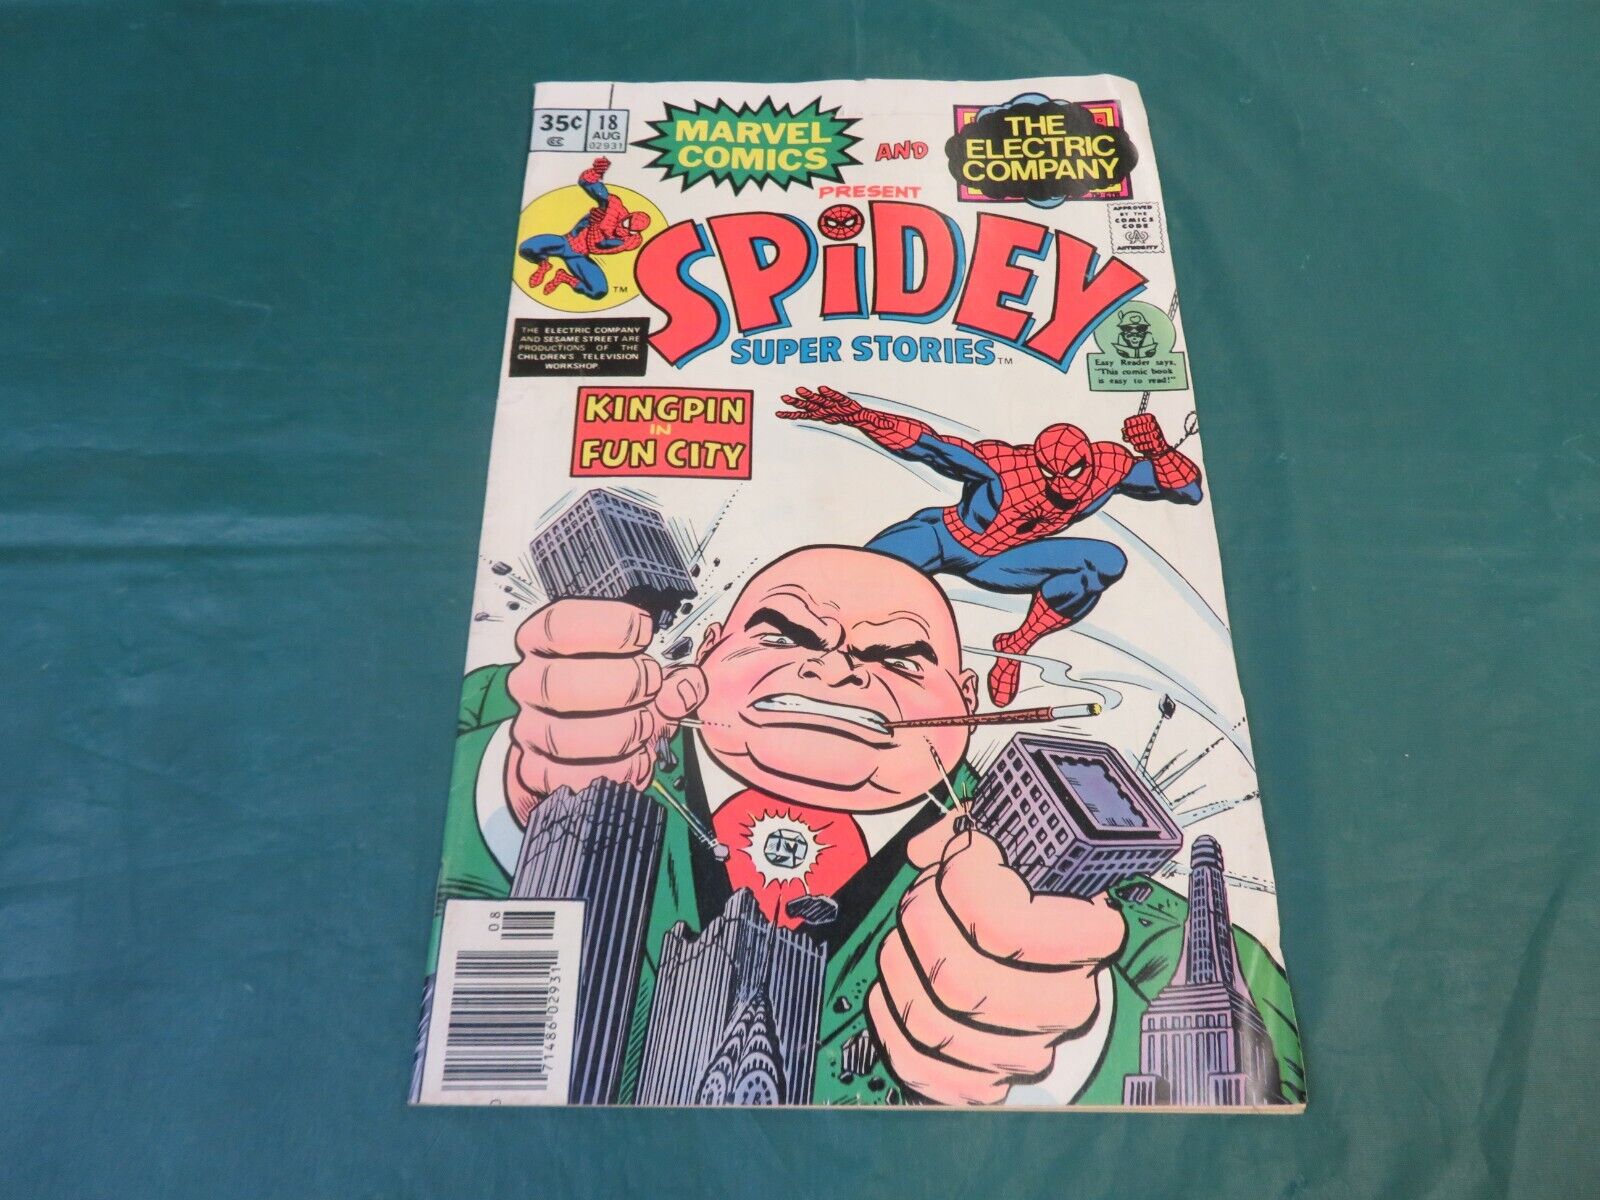 August 1976 Marvel Comic: Spidey Super Stories #18 *Spider-Man & Kingpin